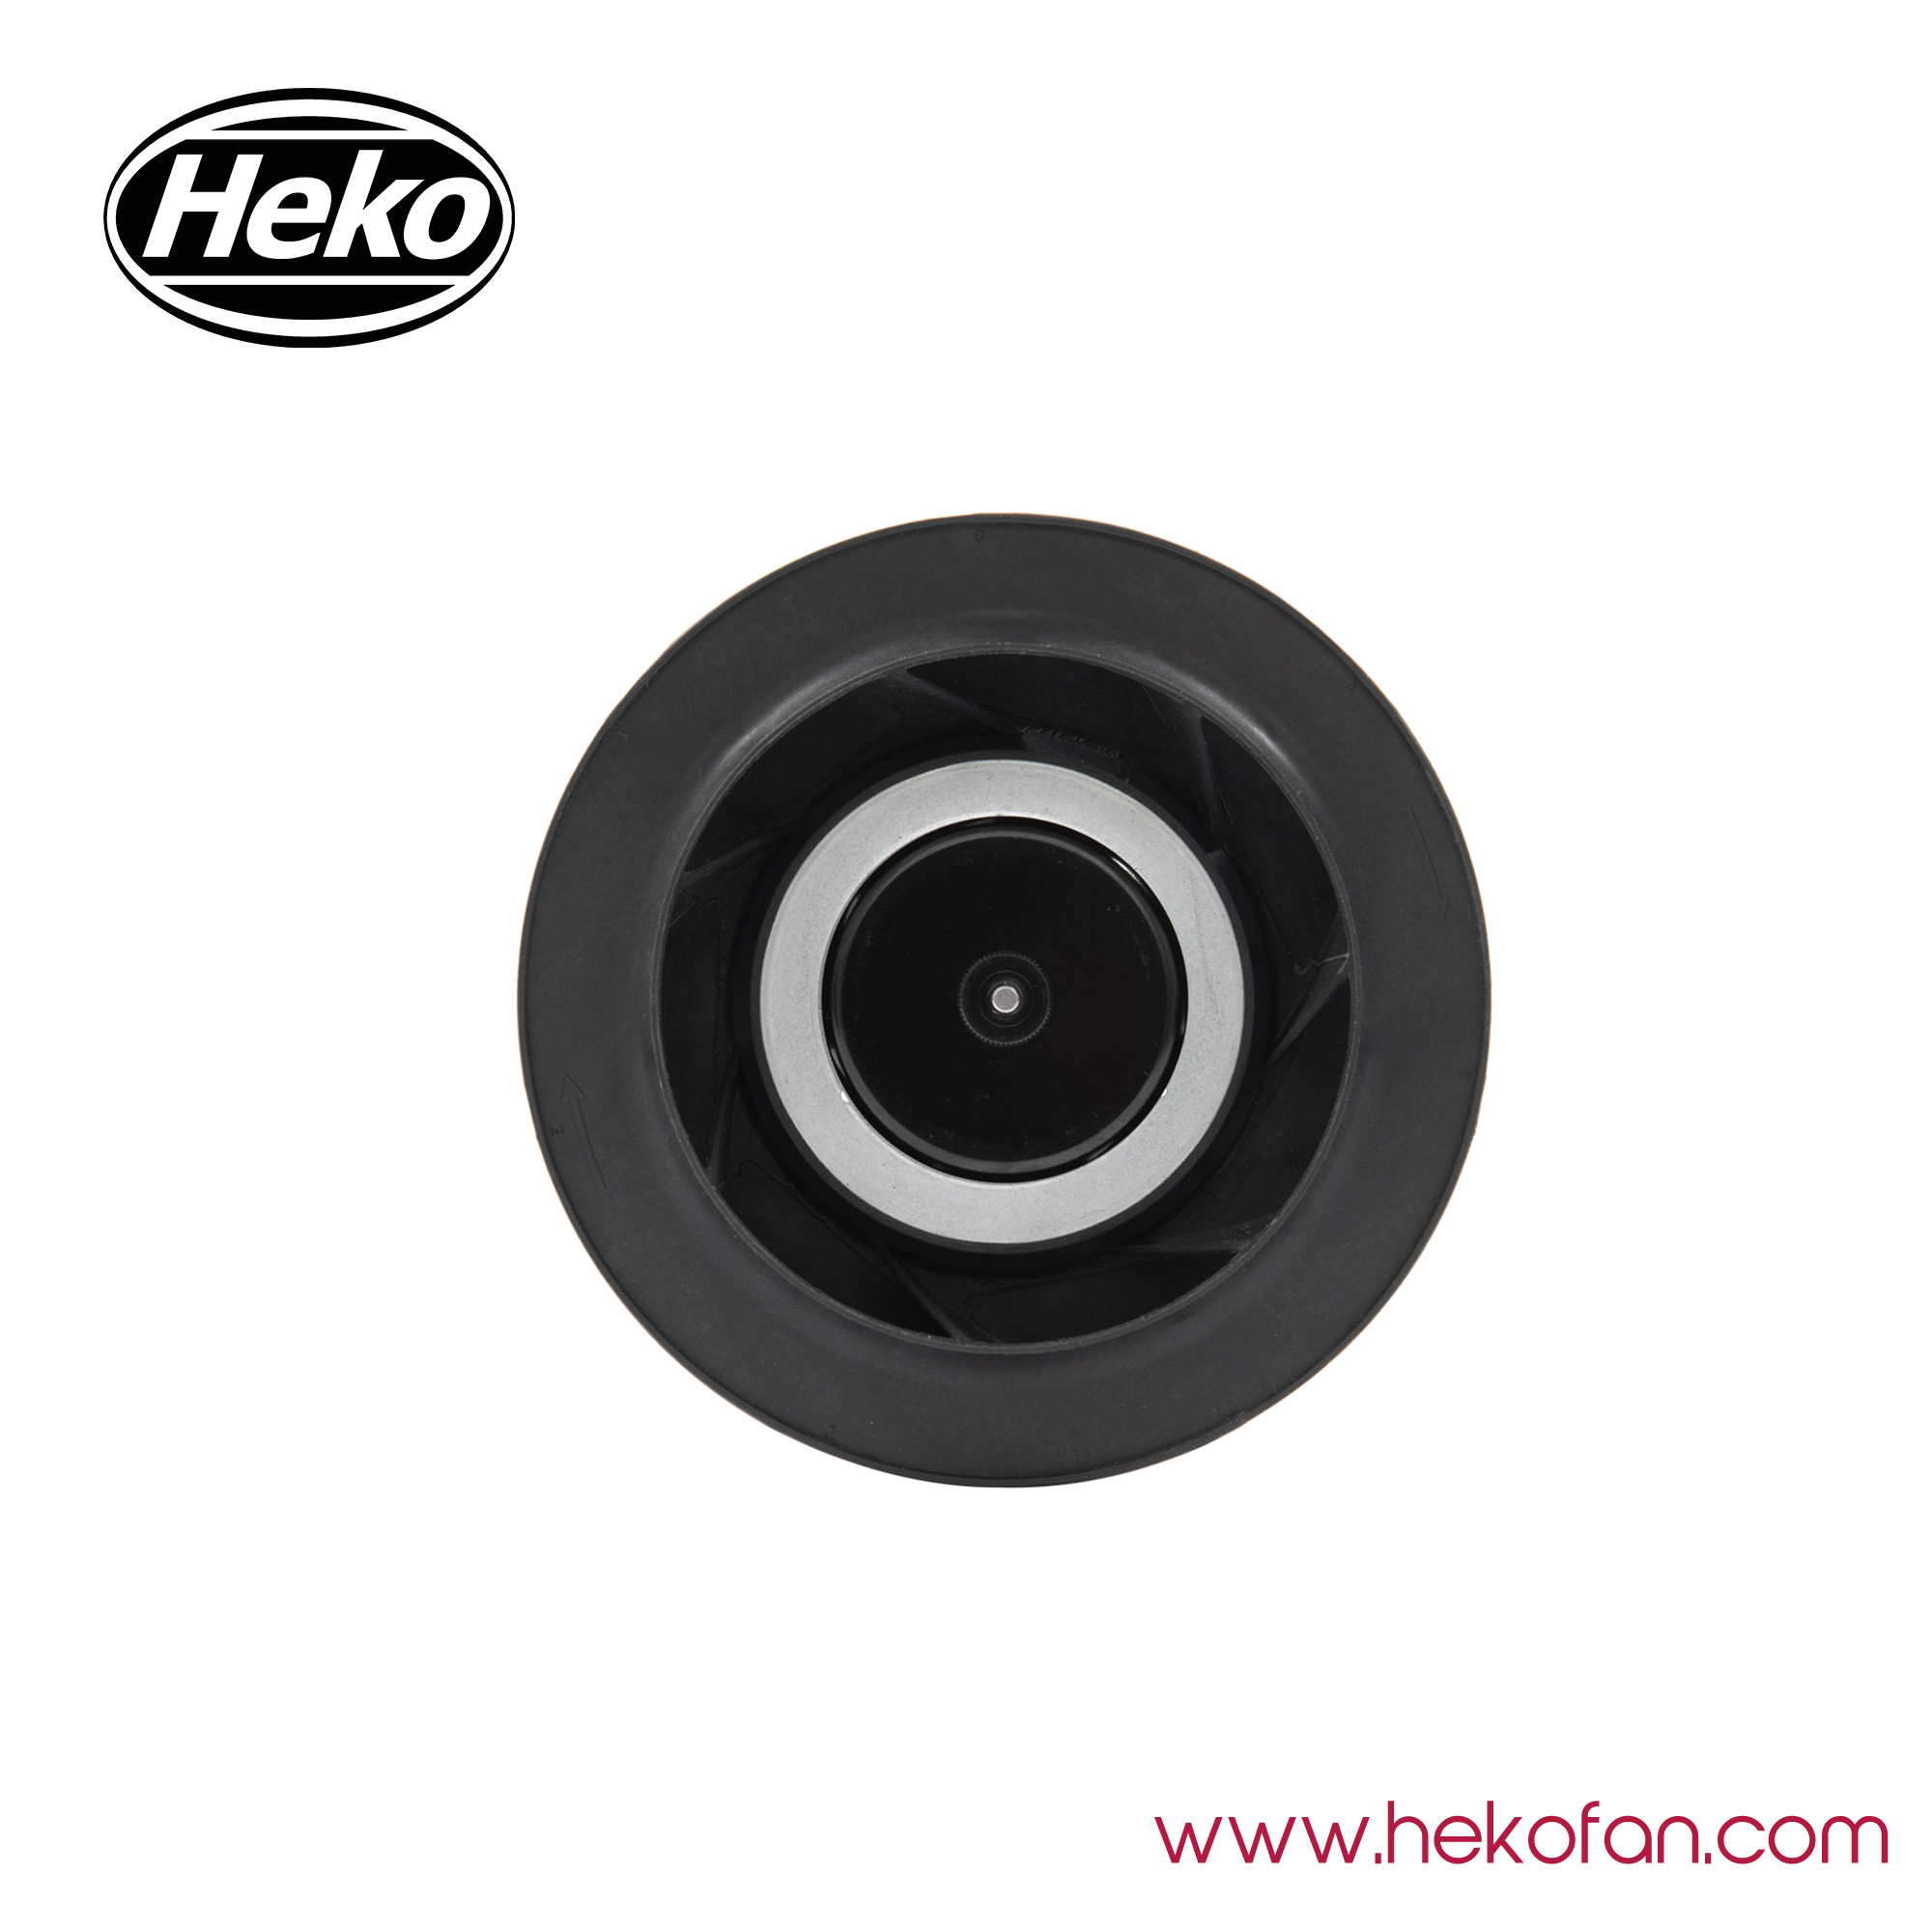 HEKO DC175mm High Static Pressure Centrifugal Fan